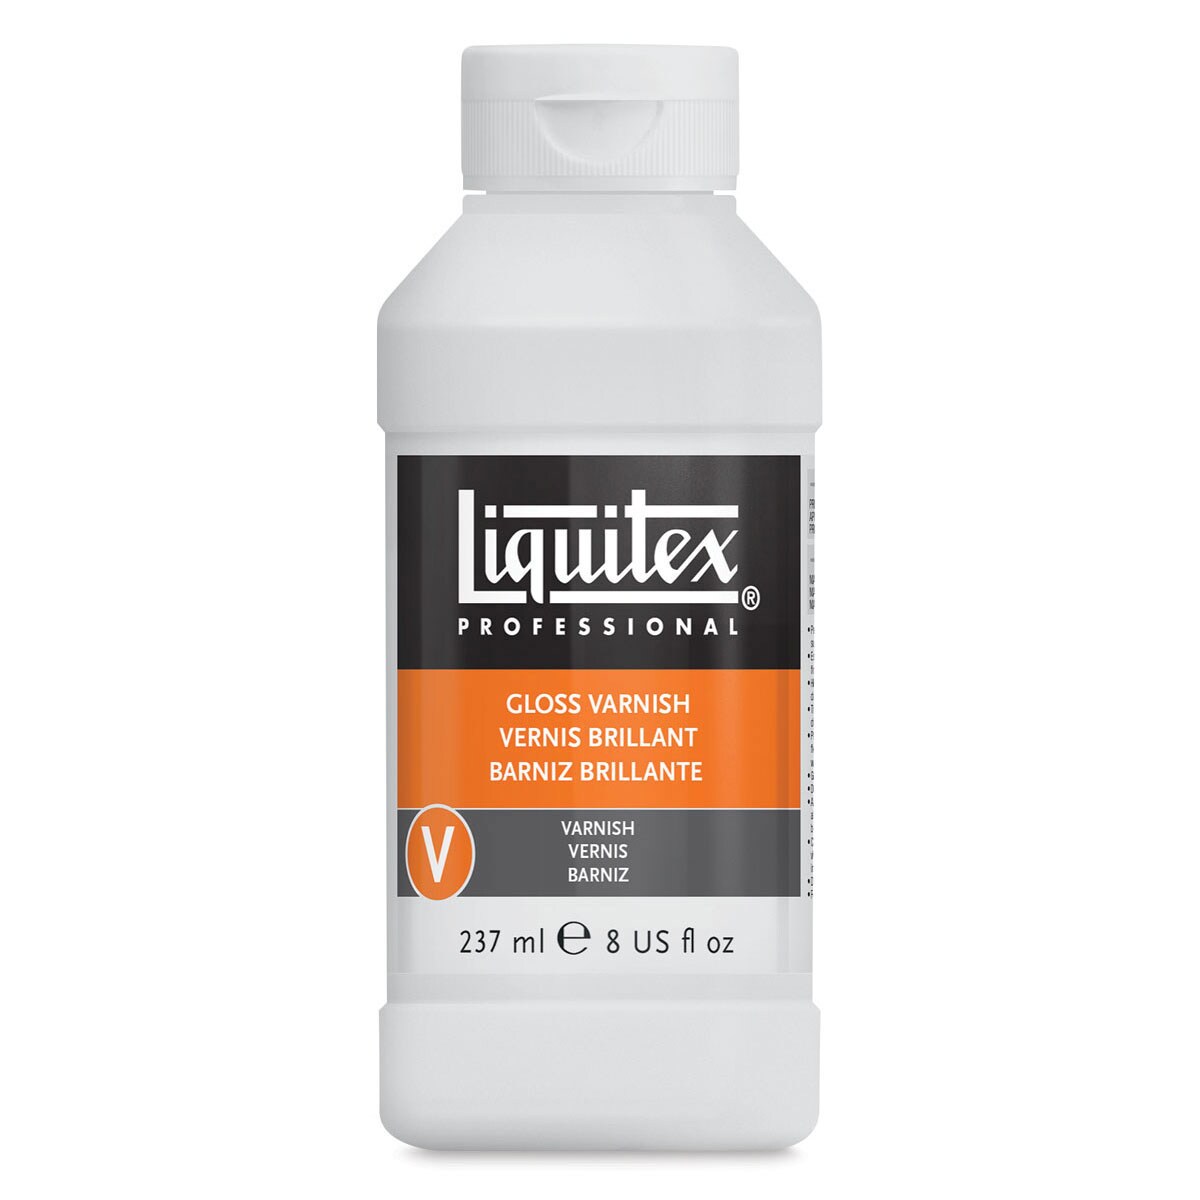 Liquitex Acrylic Varnish - Gloss, 8 oz bottle